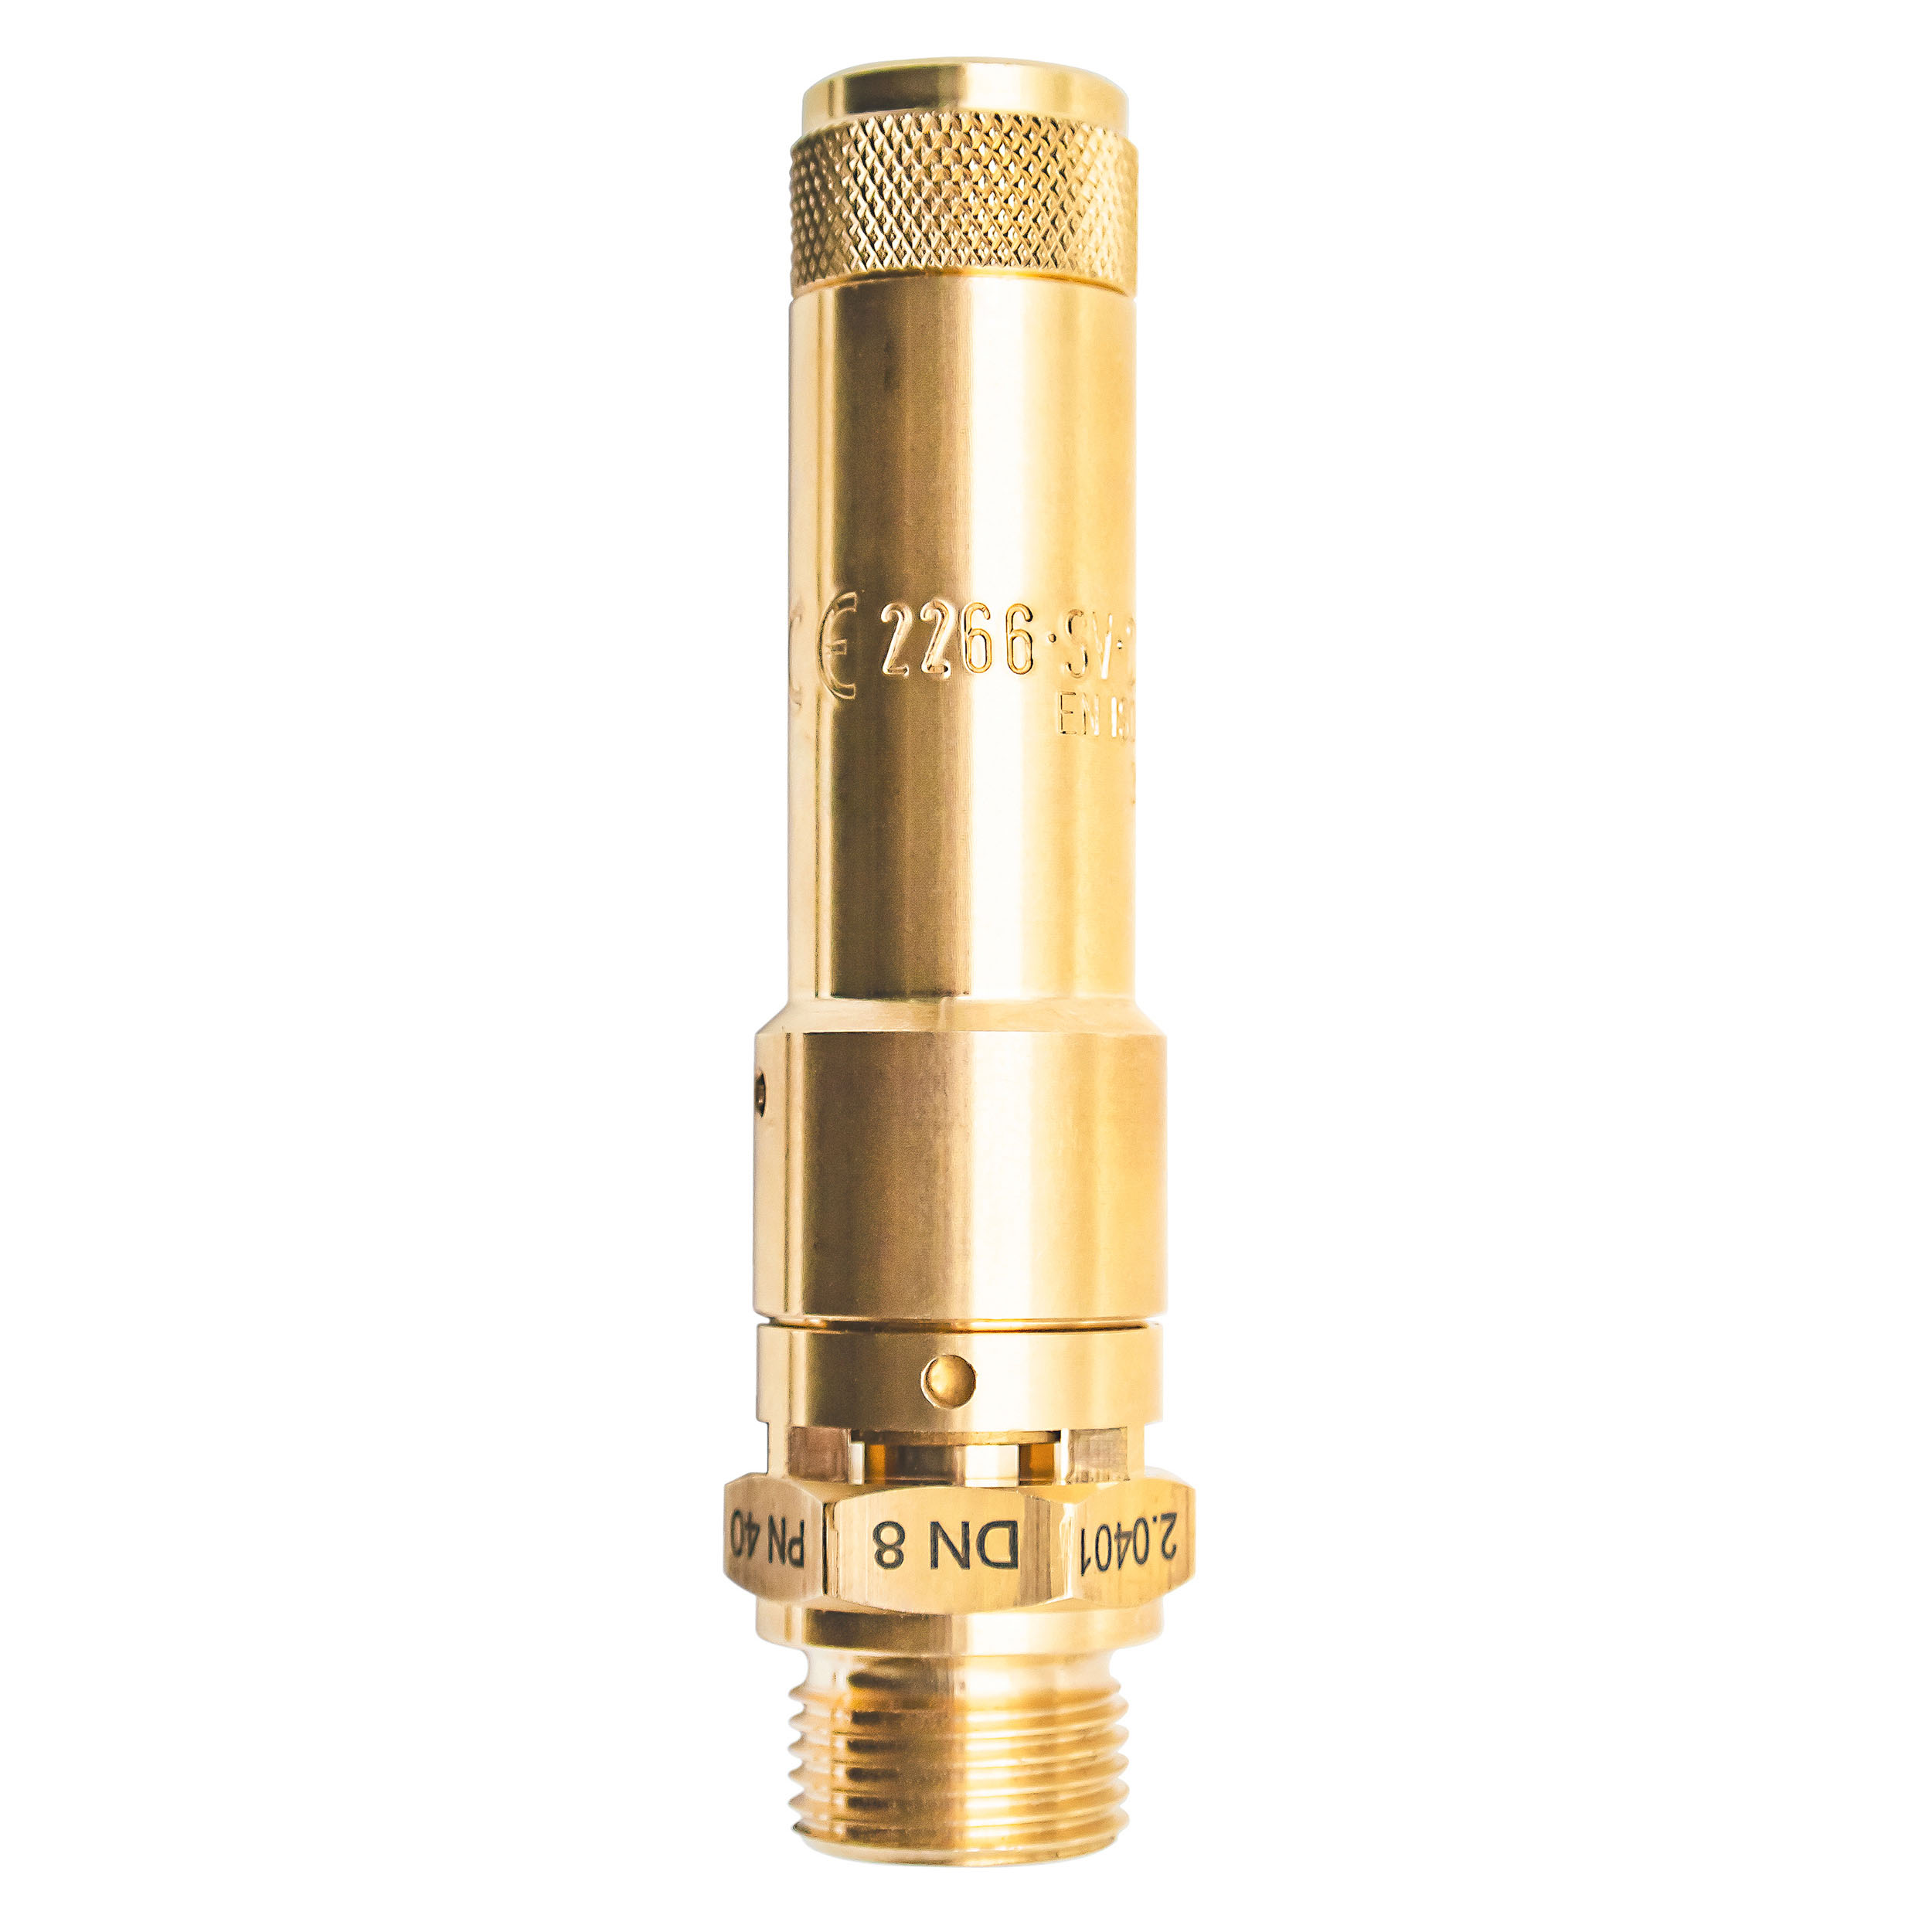 Savety valve component tested DN 8, G¼, set pressure: 1.8 bar (26,1 psi)